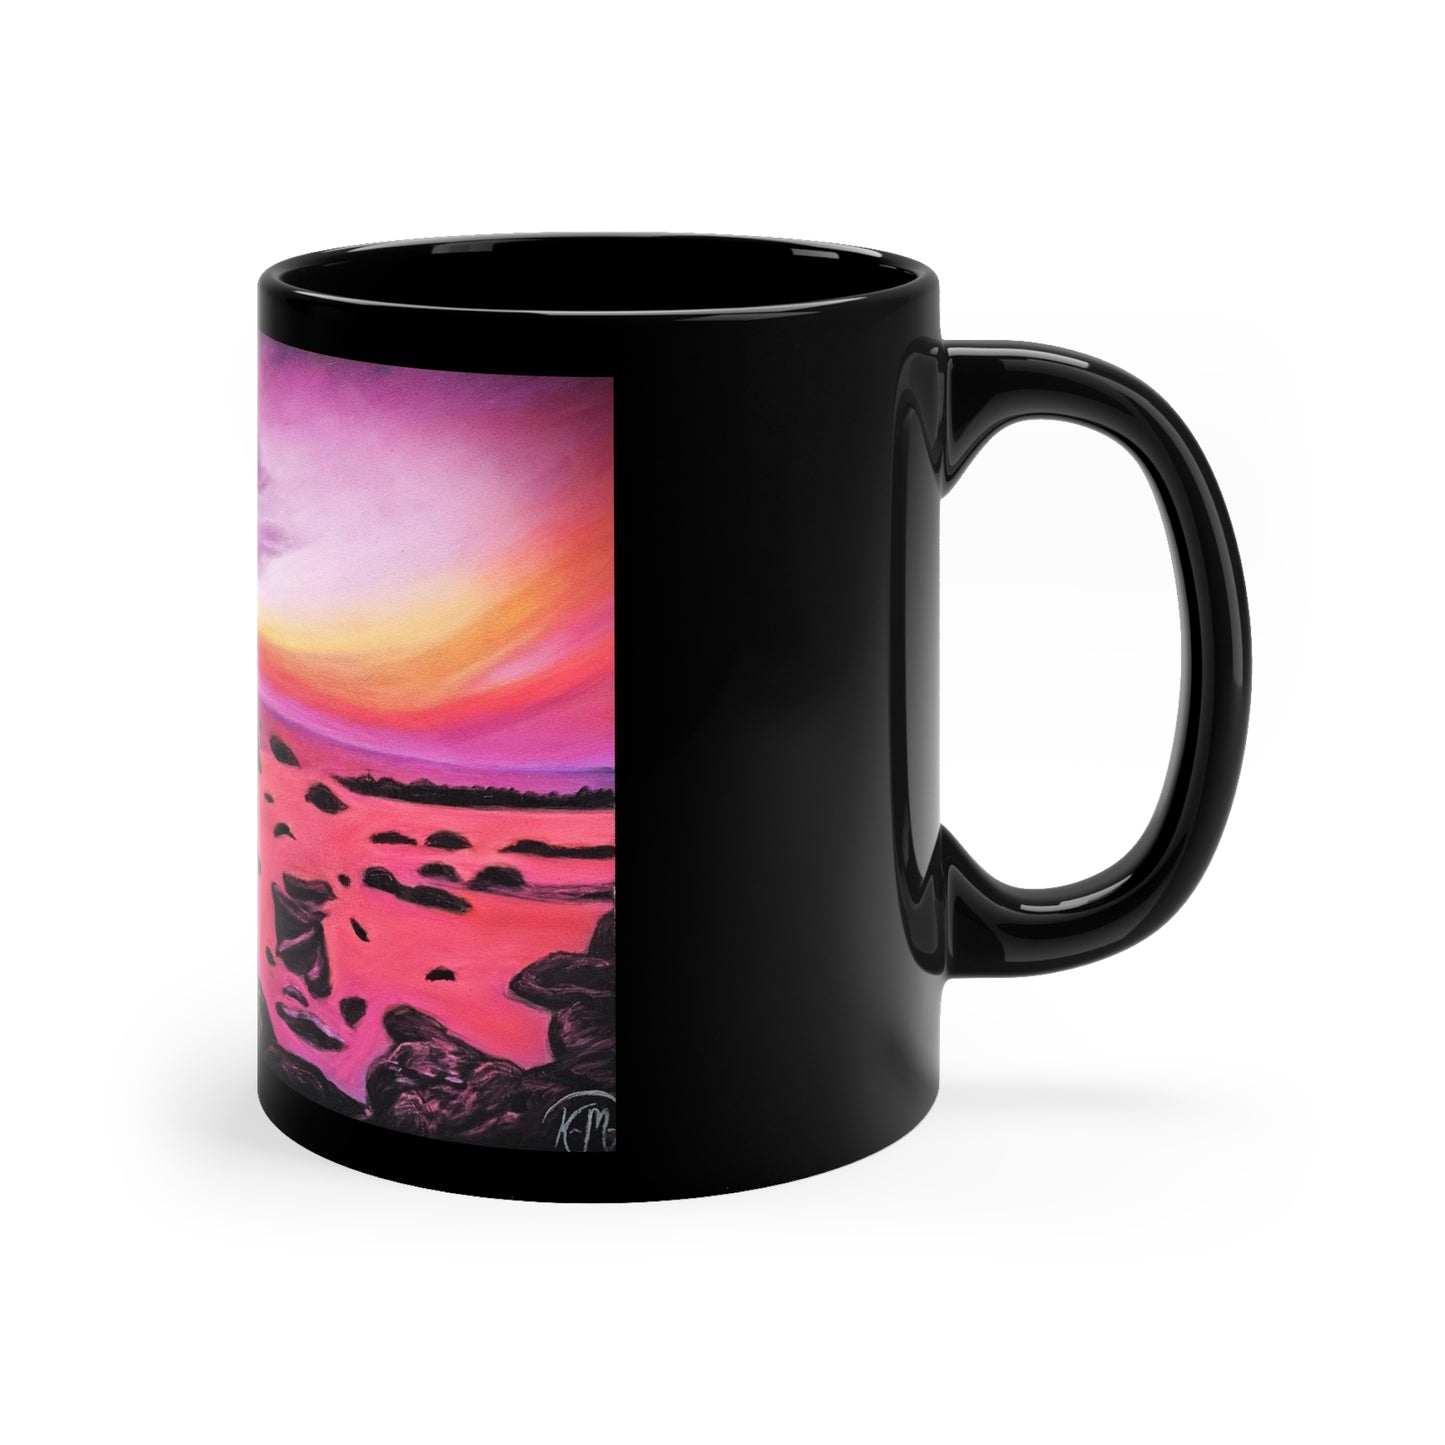 "Sunset at Sea" 11oz Black Mug